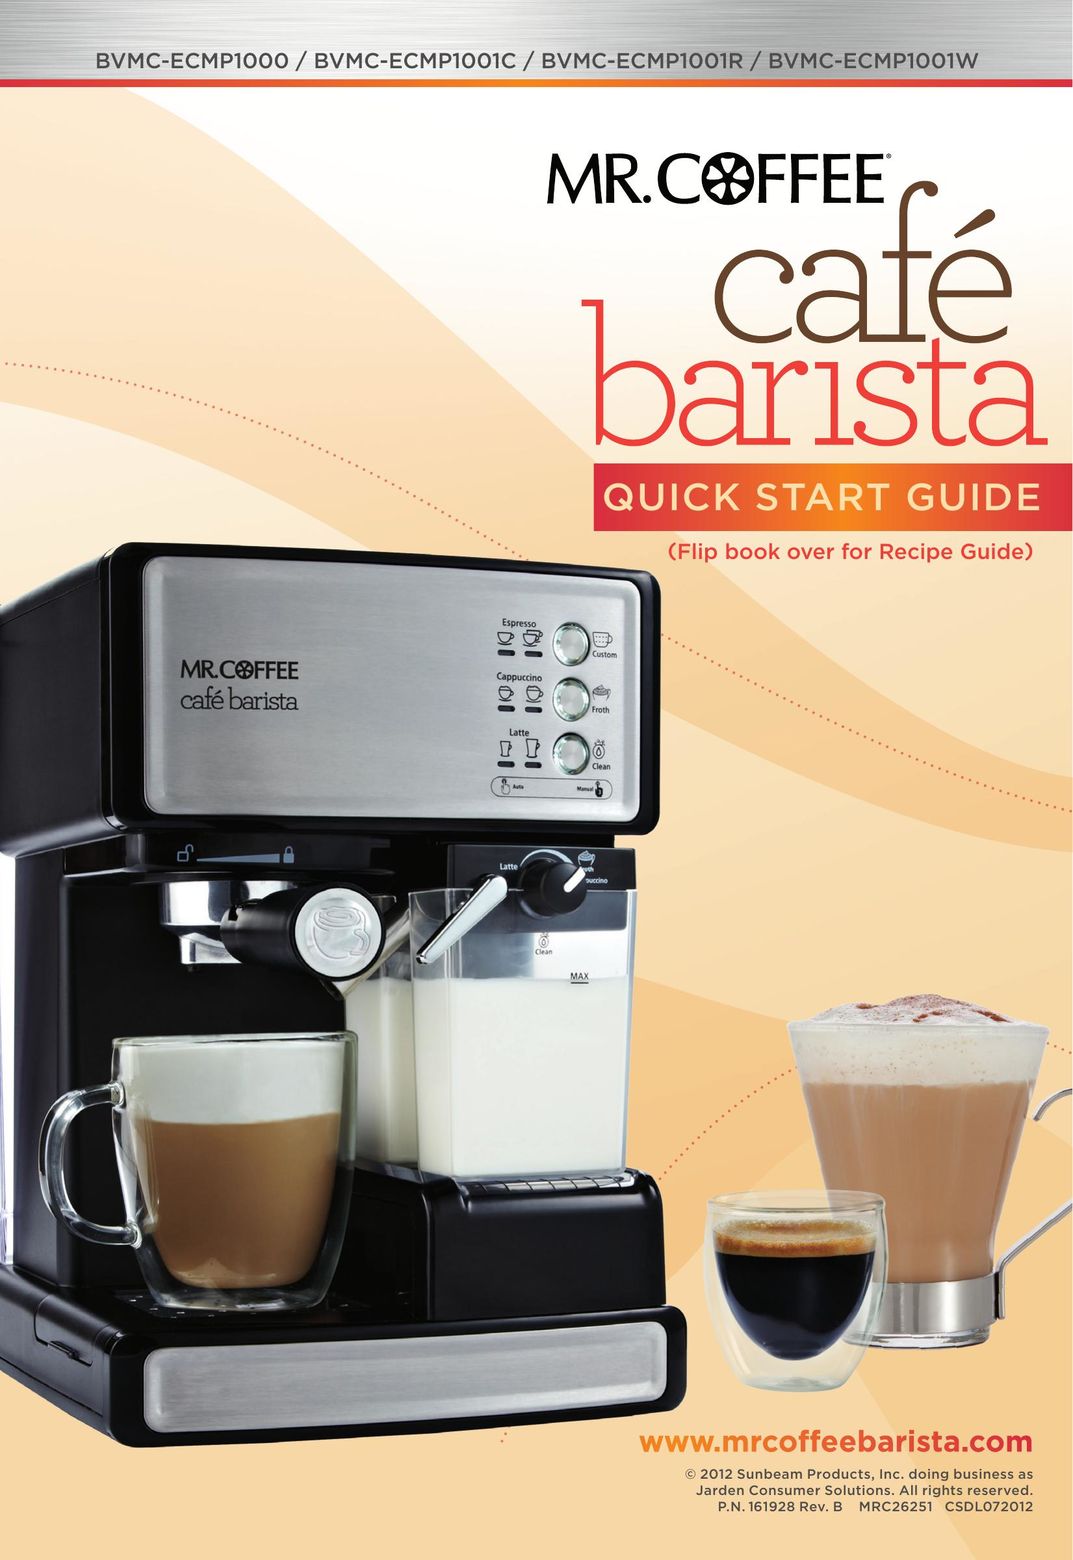 Mr. Coffee BVMC-ECMP1000 Coffeemaker User Manual